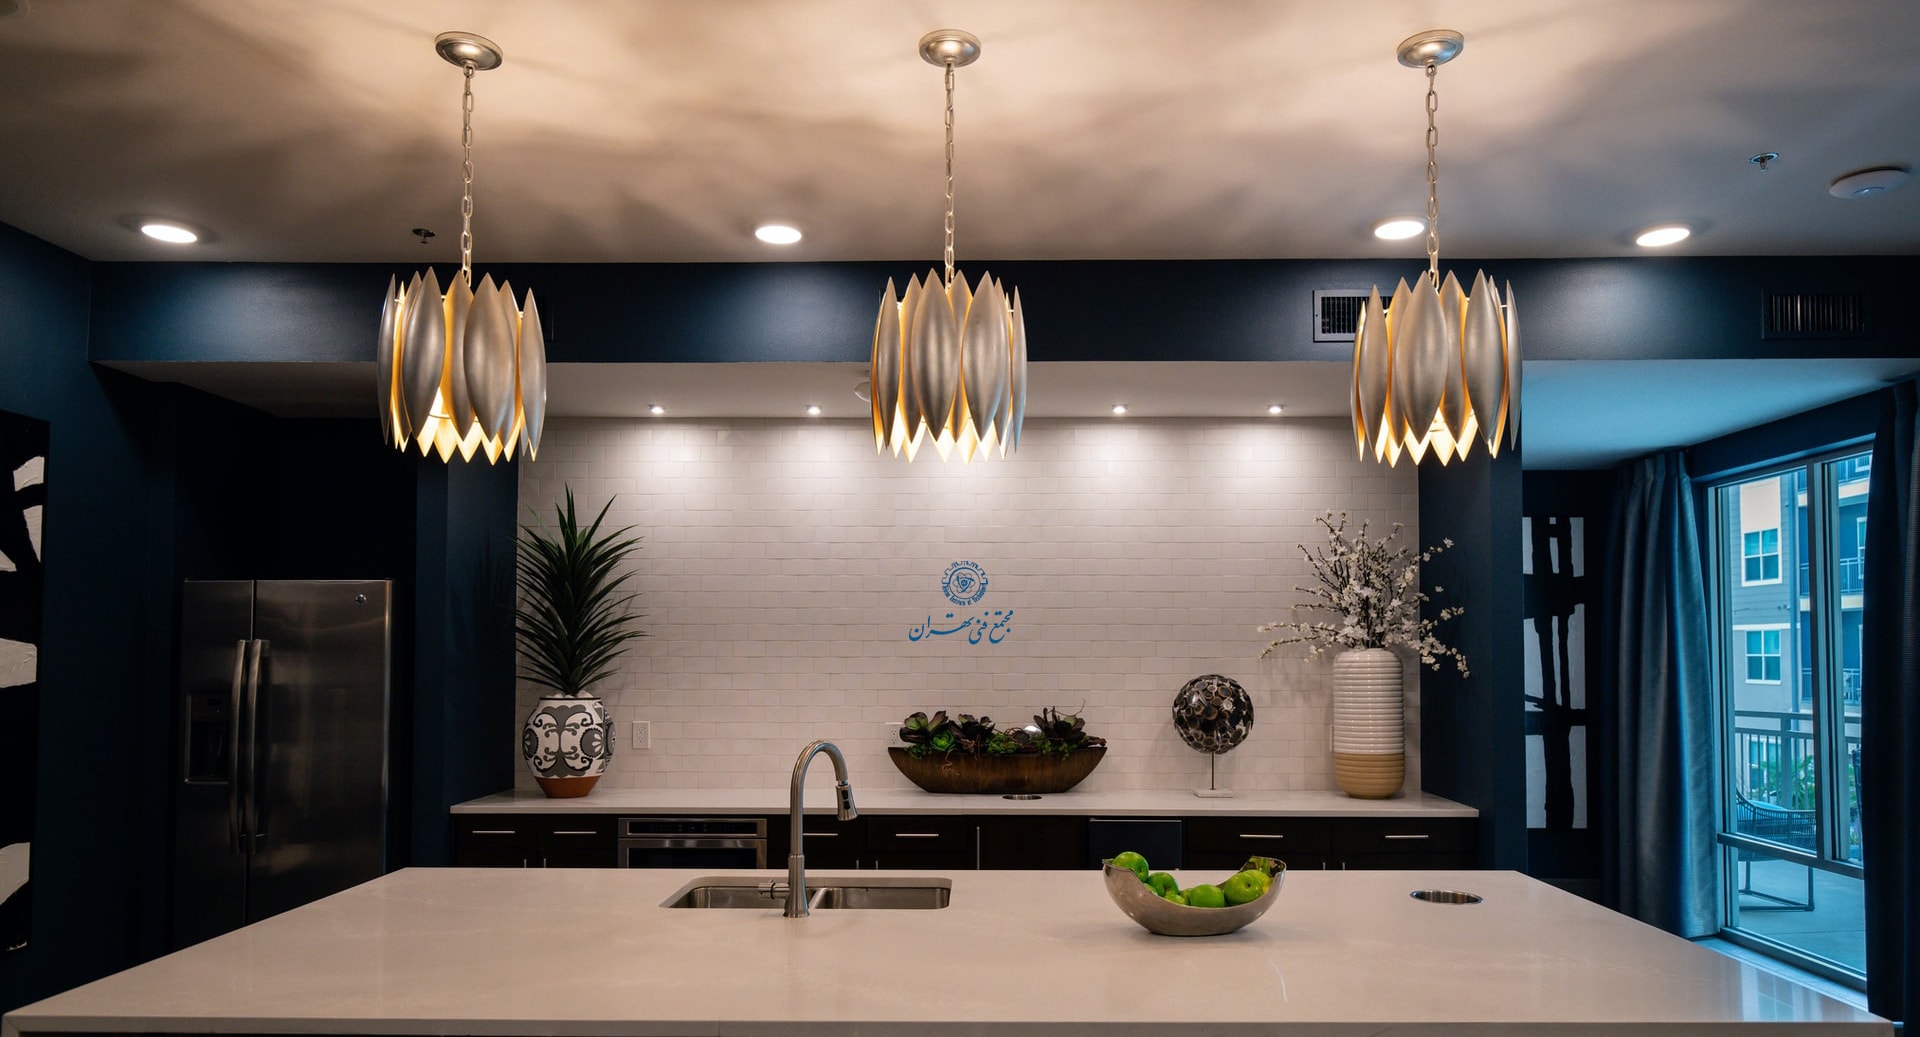 نورپردازی اصولی در طراحی دکوراسیون آشپزخانه